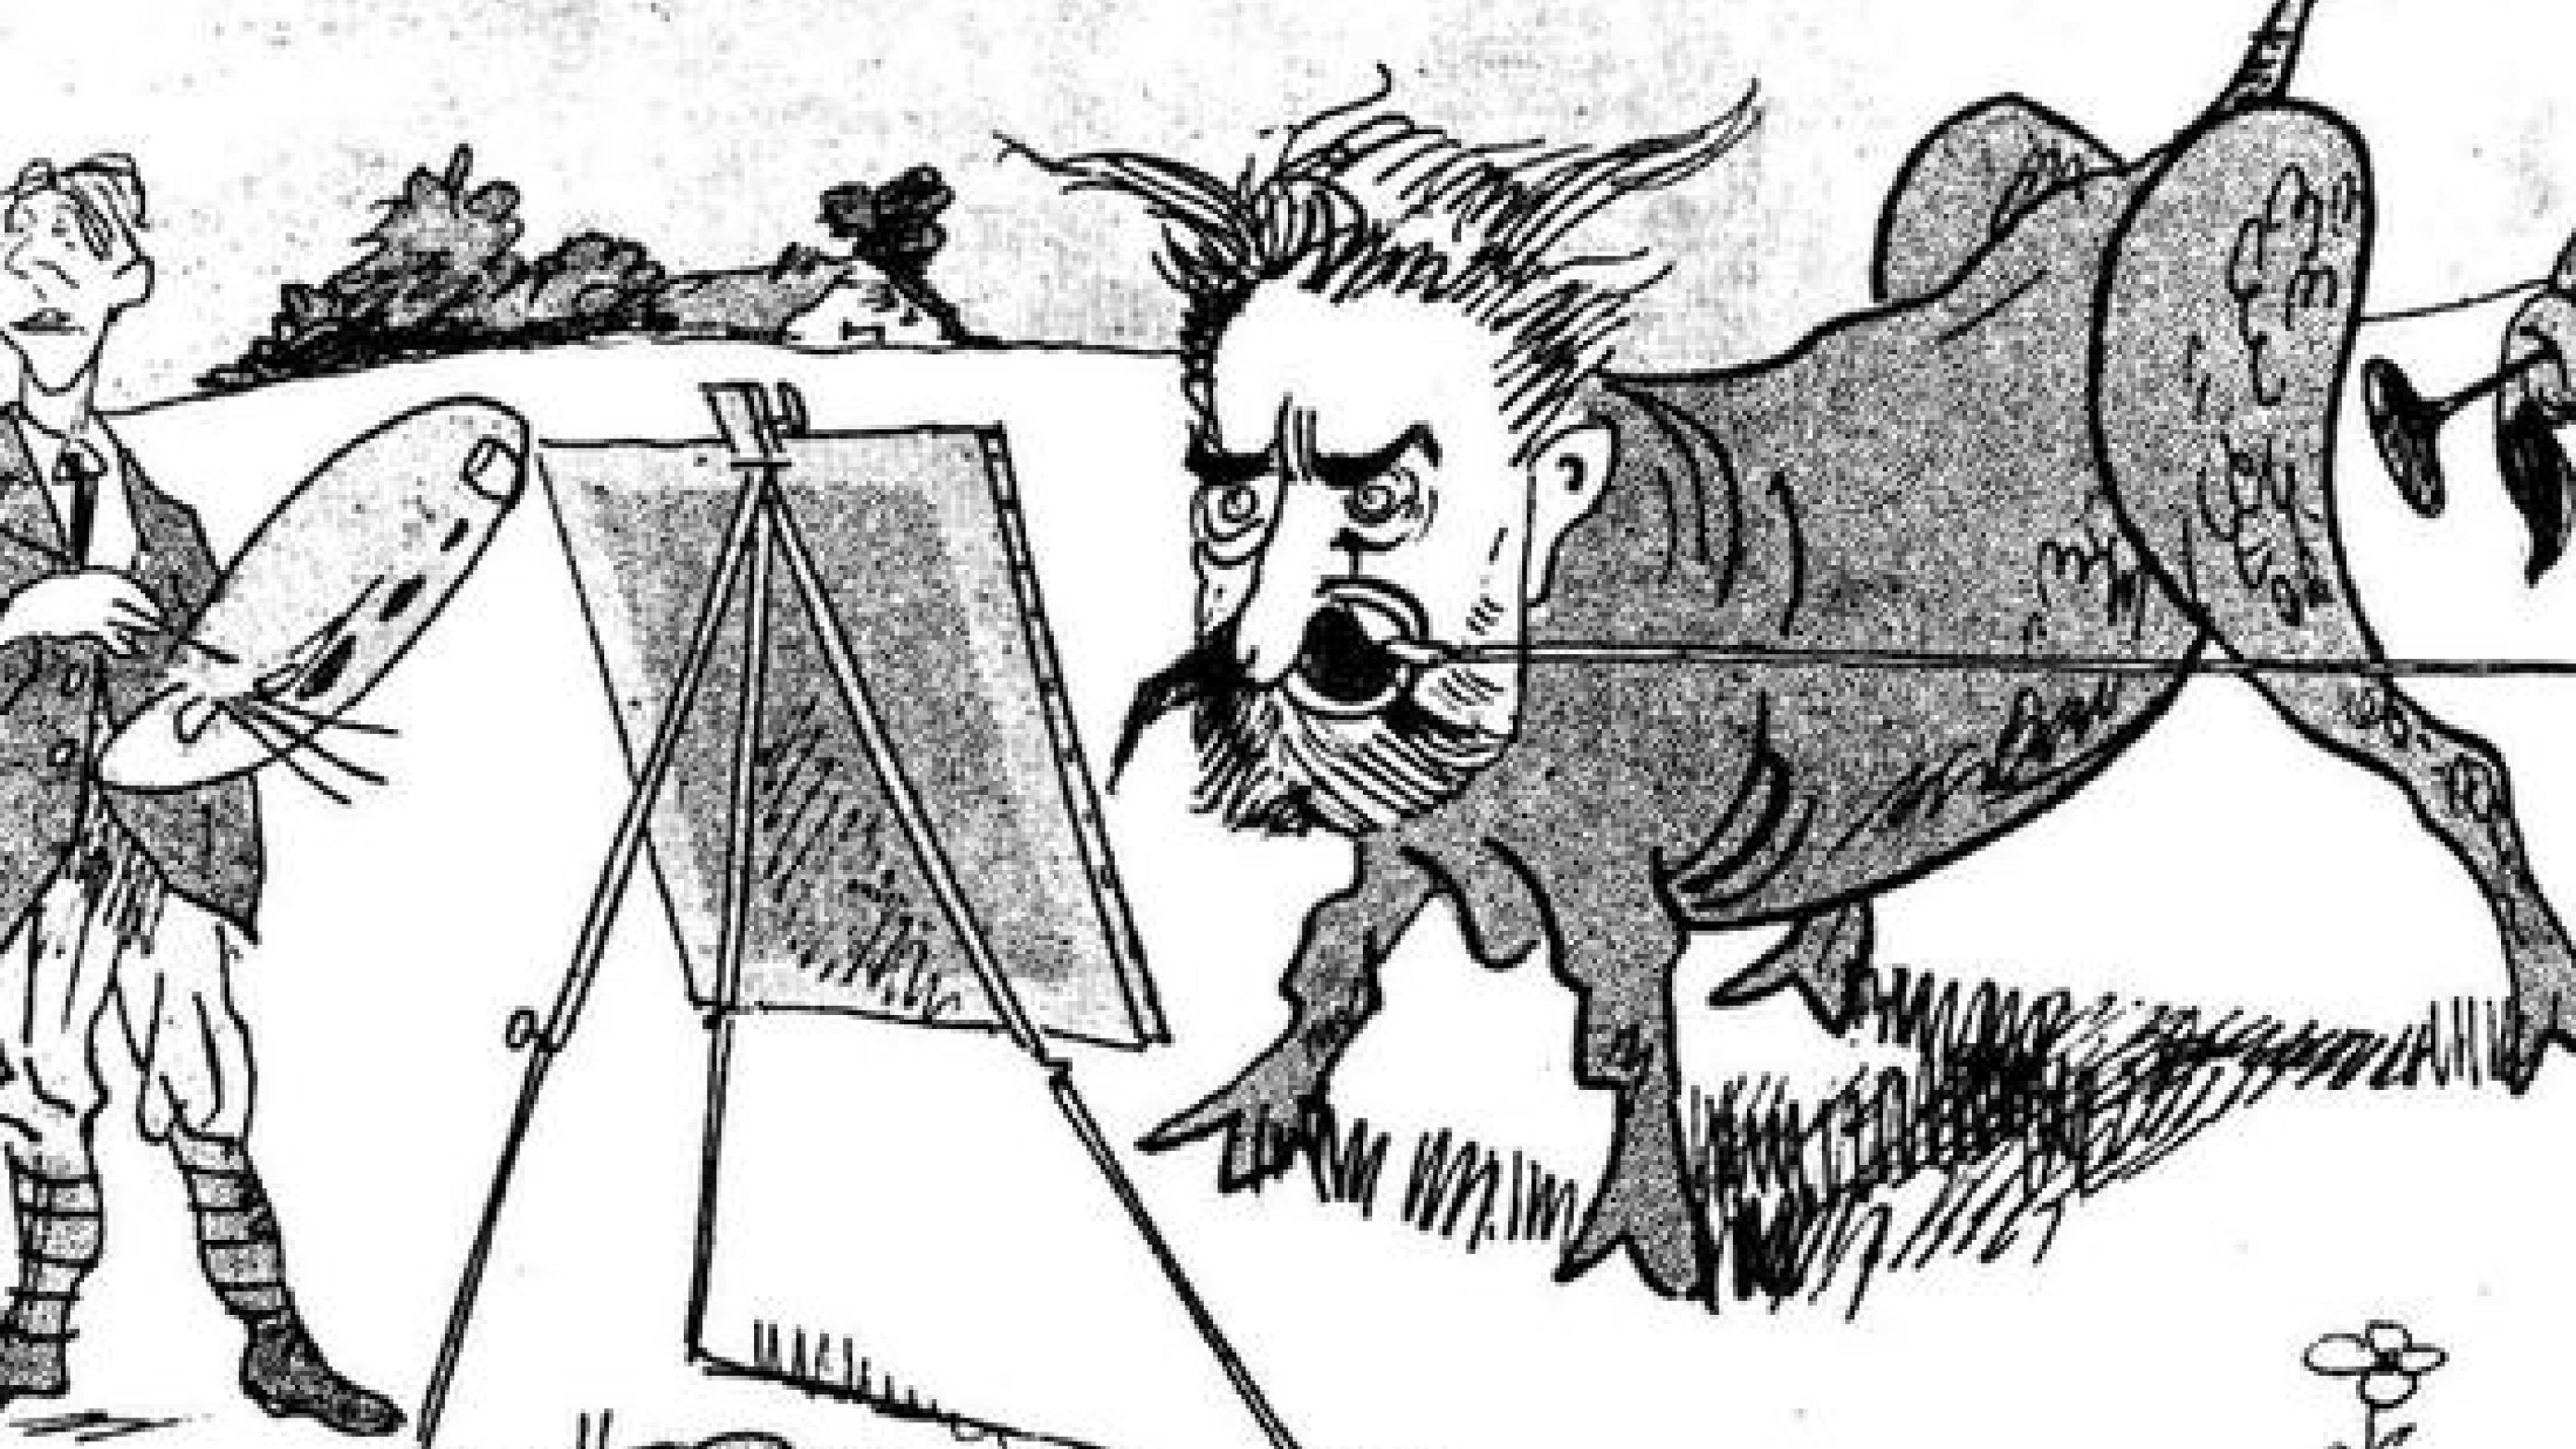 Den internationalt berømte bakteriolog C.J. Salomonsen går som en olm tyr løs på den moderne kunst. Han så den som en slags smitson sindssygdom. Samtidig karikatur.